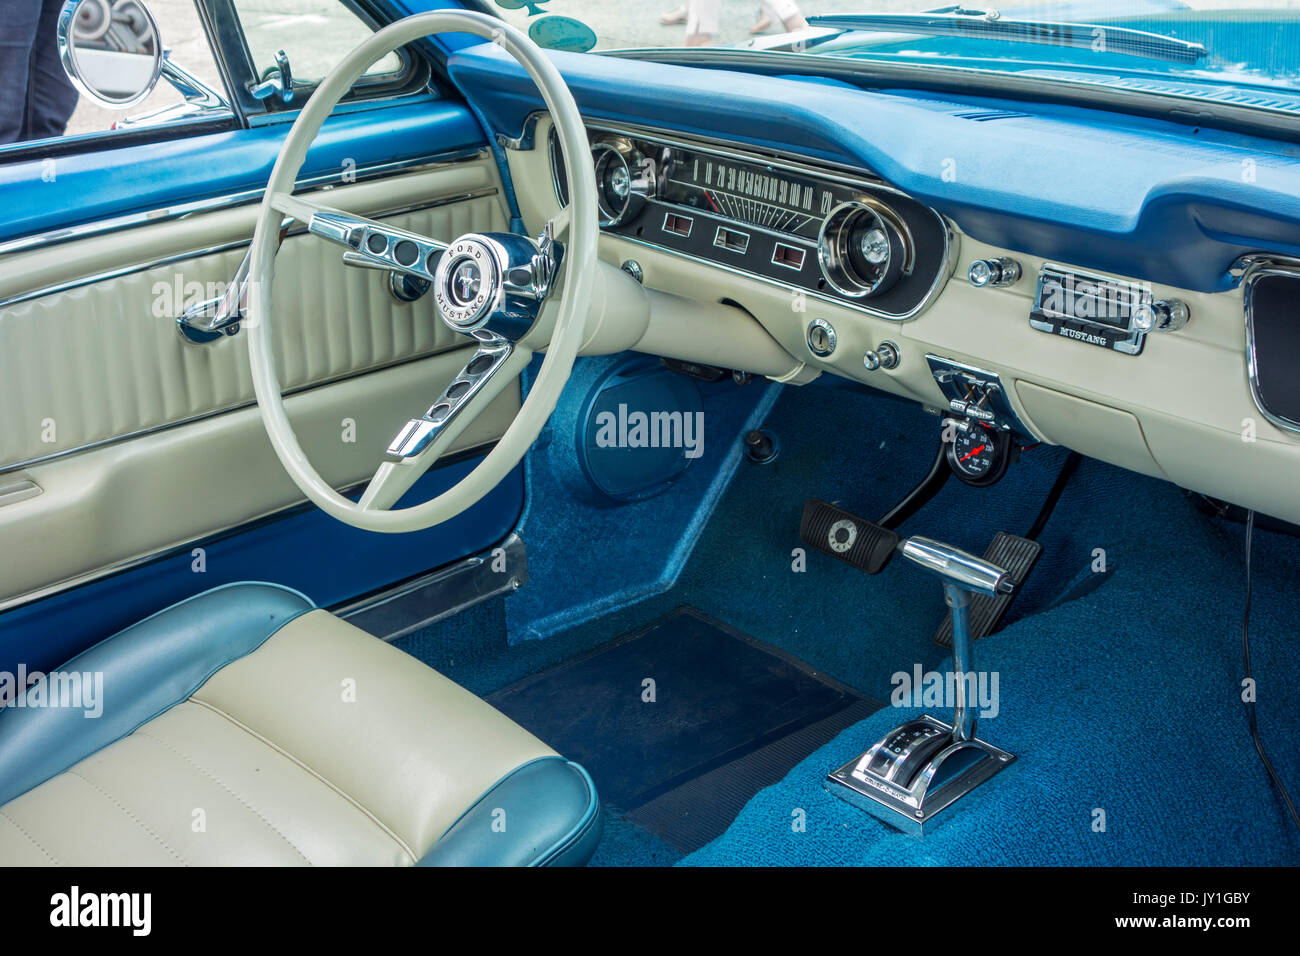 Jahrgang 1965 Ford Mustang Innenraum Mit Lenkrad Und